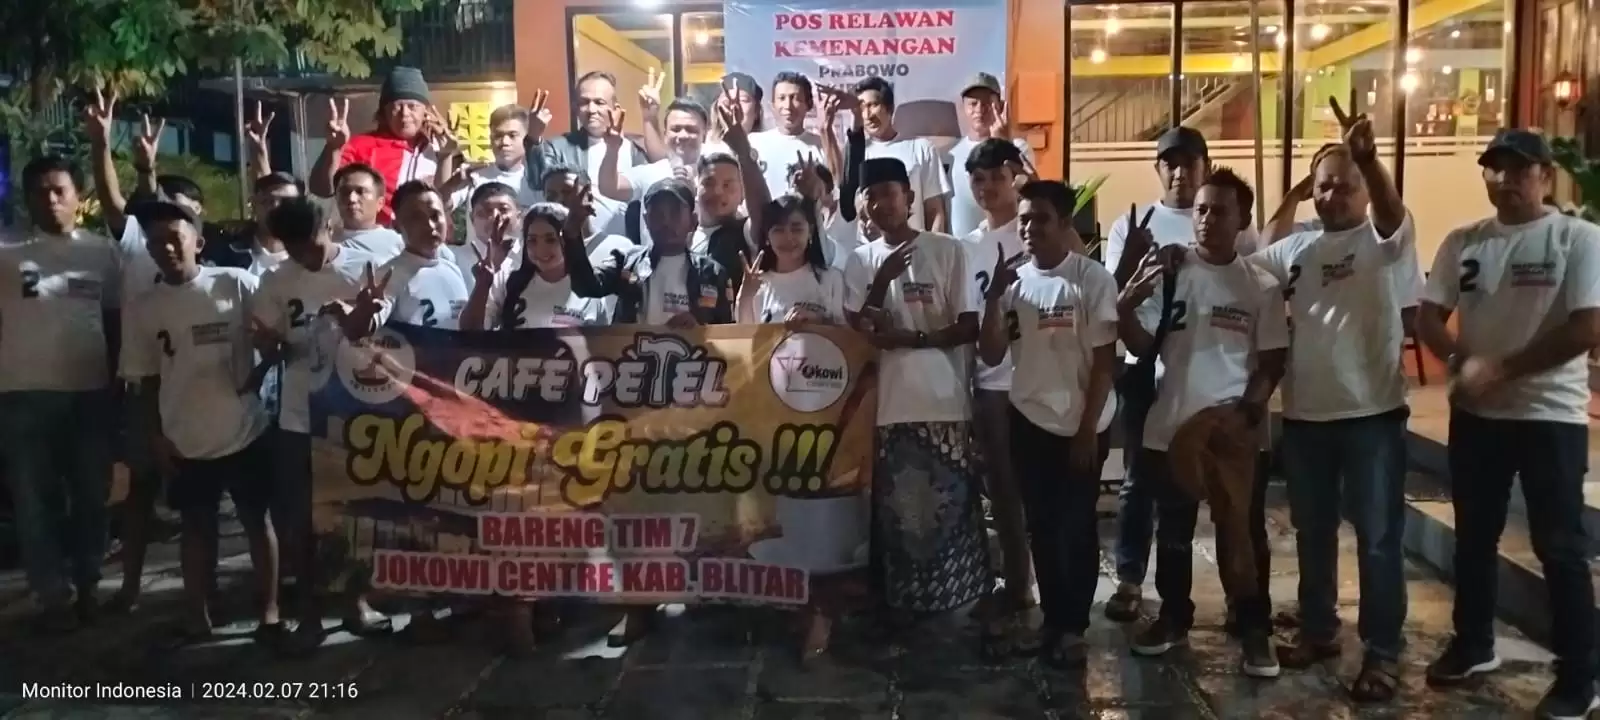 Tim 7 Jokowi Centre Kabupaten Blitar, bersama komunitas relawan pemenangan Prabowo-Gibran di Cafe Petel, Wlingi, Blitar (Foto: Dok MI)